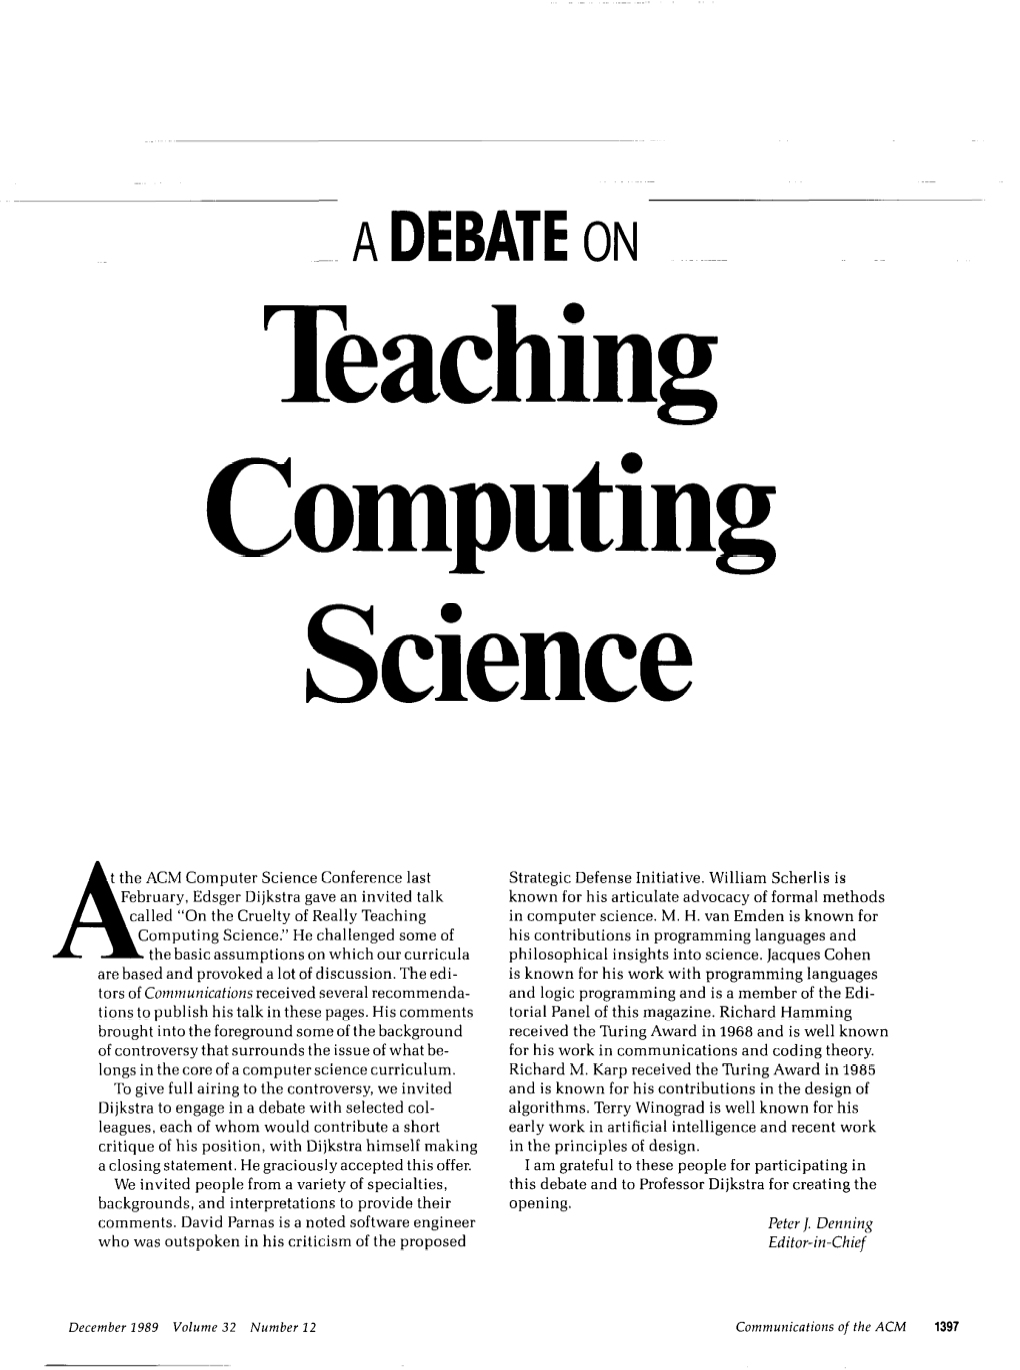 Teaching Computing Science